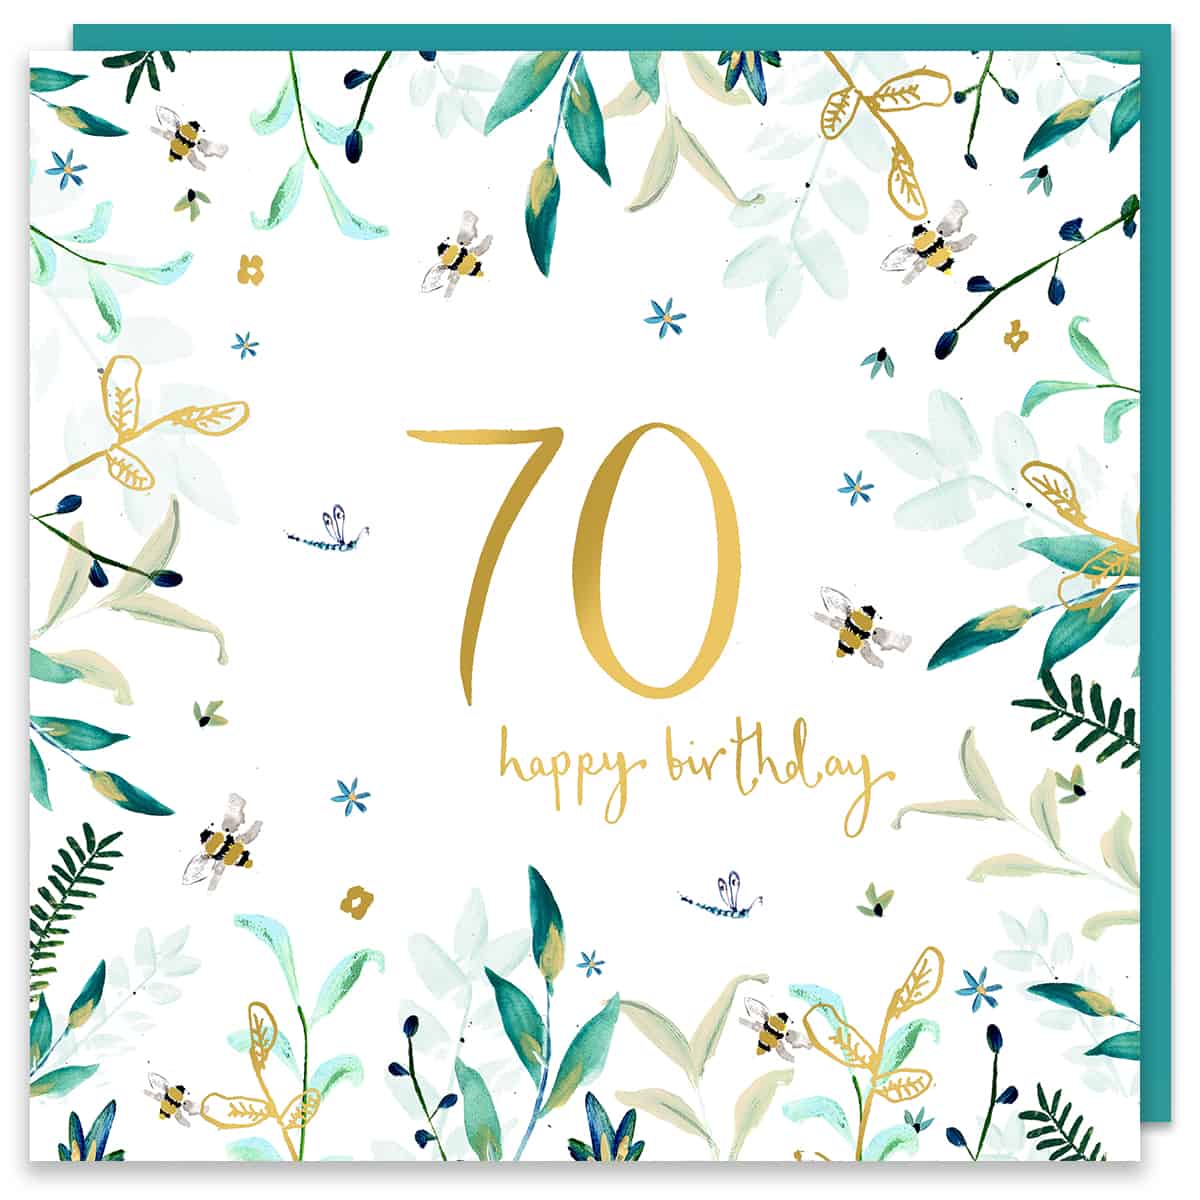 70th birthday card